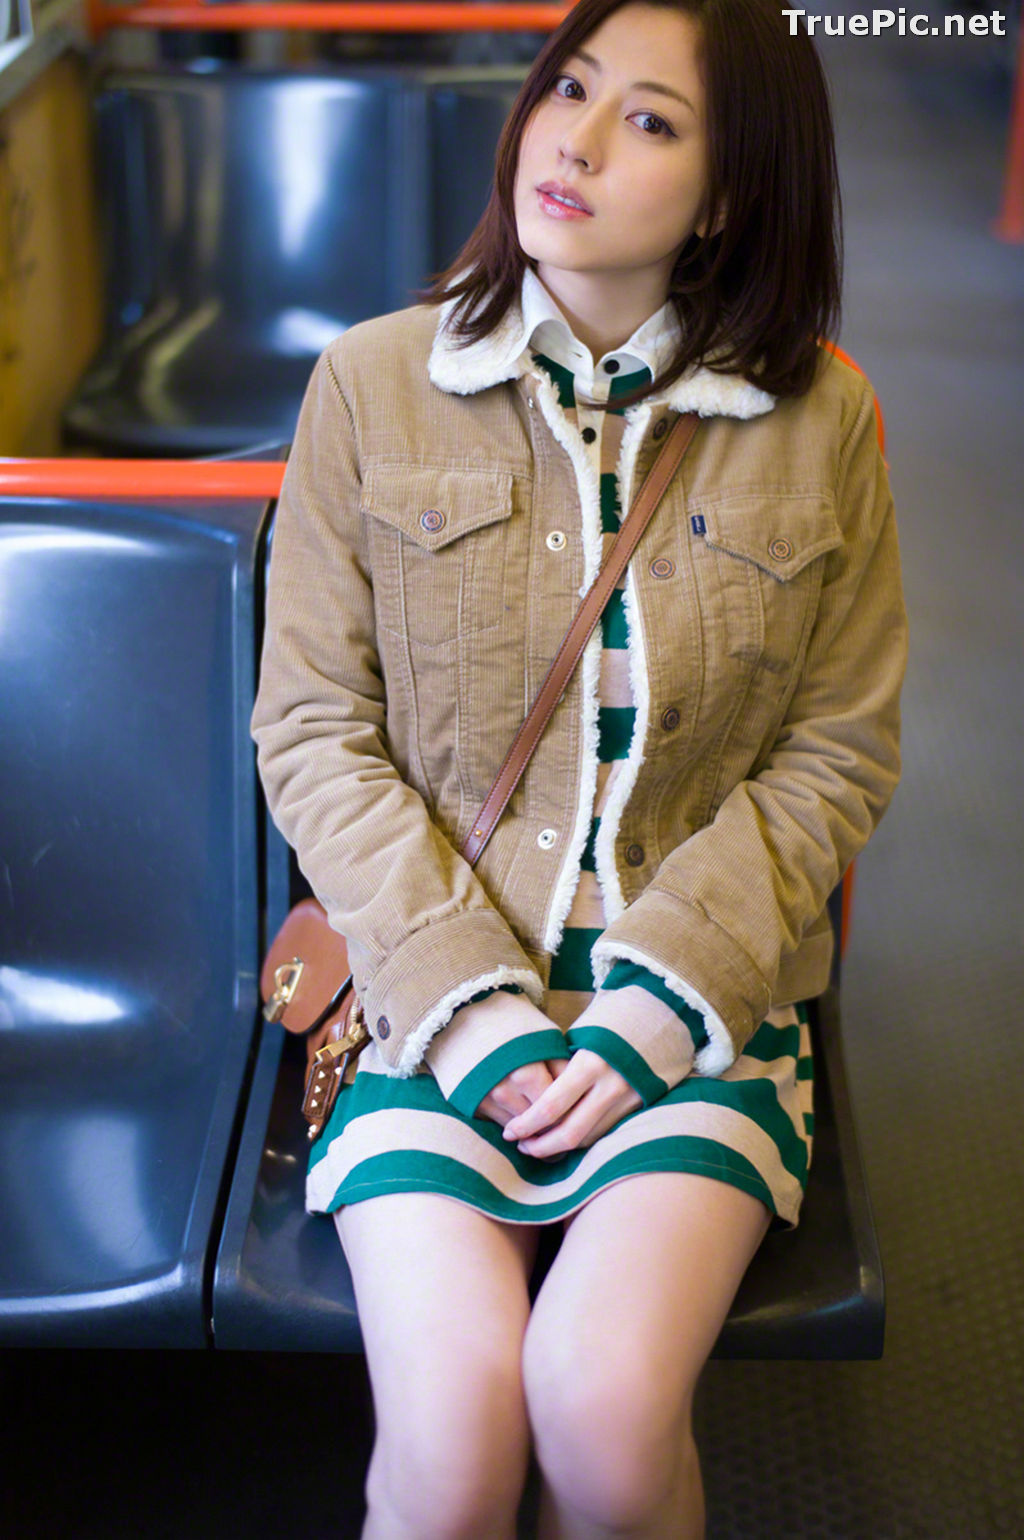 Image Wanibooks No.136 - Japanese Actress and Singer - Yumi Sugimoto - TruePic.net - Picture-237